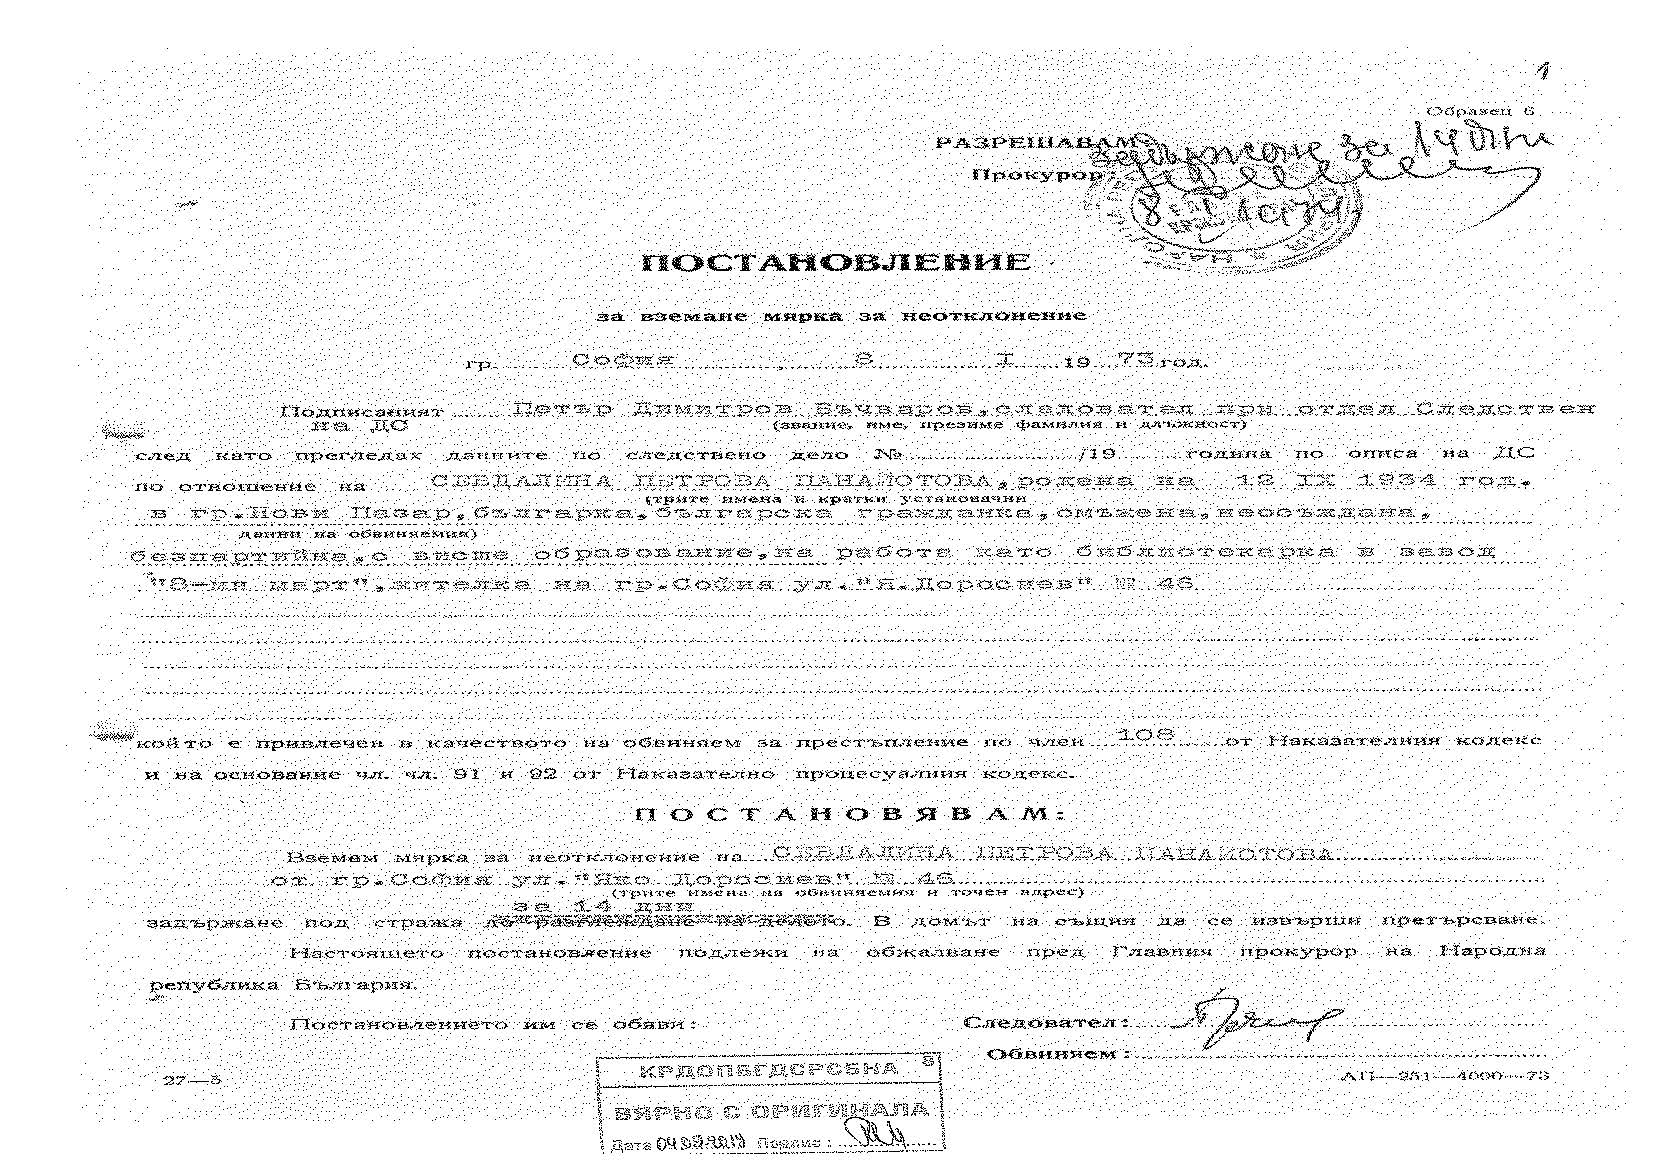 Decree for a detention order for Sevdalina Panayotova, 08.01.1973.